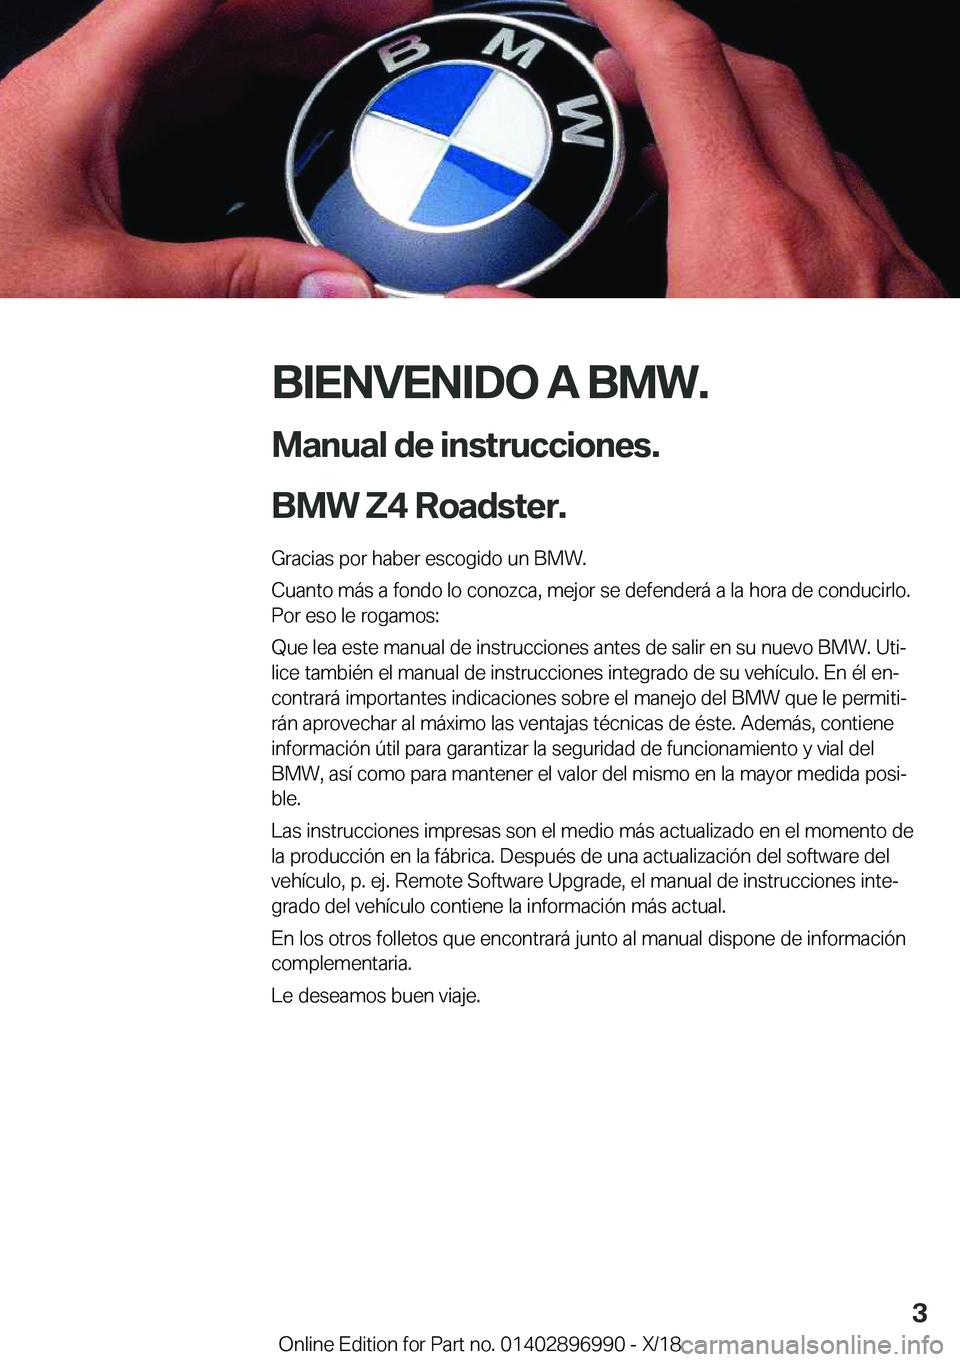 BMW Z4 2019  Manuales de Empleo (in Spanish) �B�I�E�N�V�E�N�I�D�O��A��B�M�W�.
�M�a�n�u�a�l��d�e��i�n�s�t�r�u�c�c�i�o�n�e�s�.
�B�M�W��Z�4��R�o�a�d�s�t�e�r�. �G�r�a�c�i�a�s��p�o�r��h�a�b�e�r��e�s�c�o�g�i�d�o��u�n��B�M�W�.
�C�u�a�n�t�o�